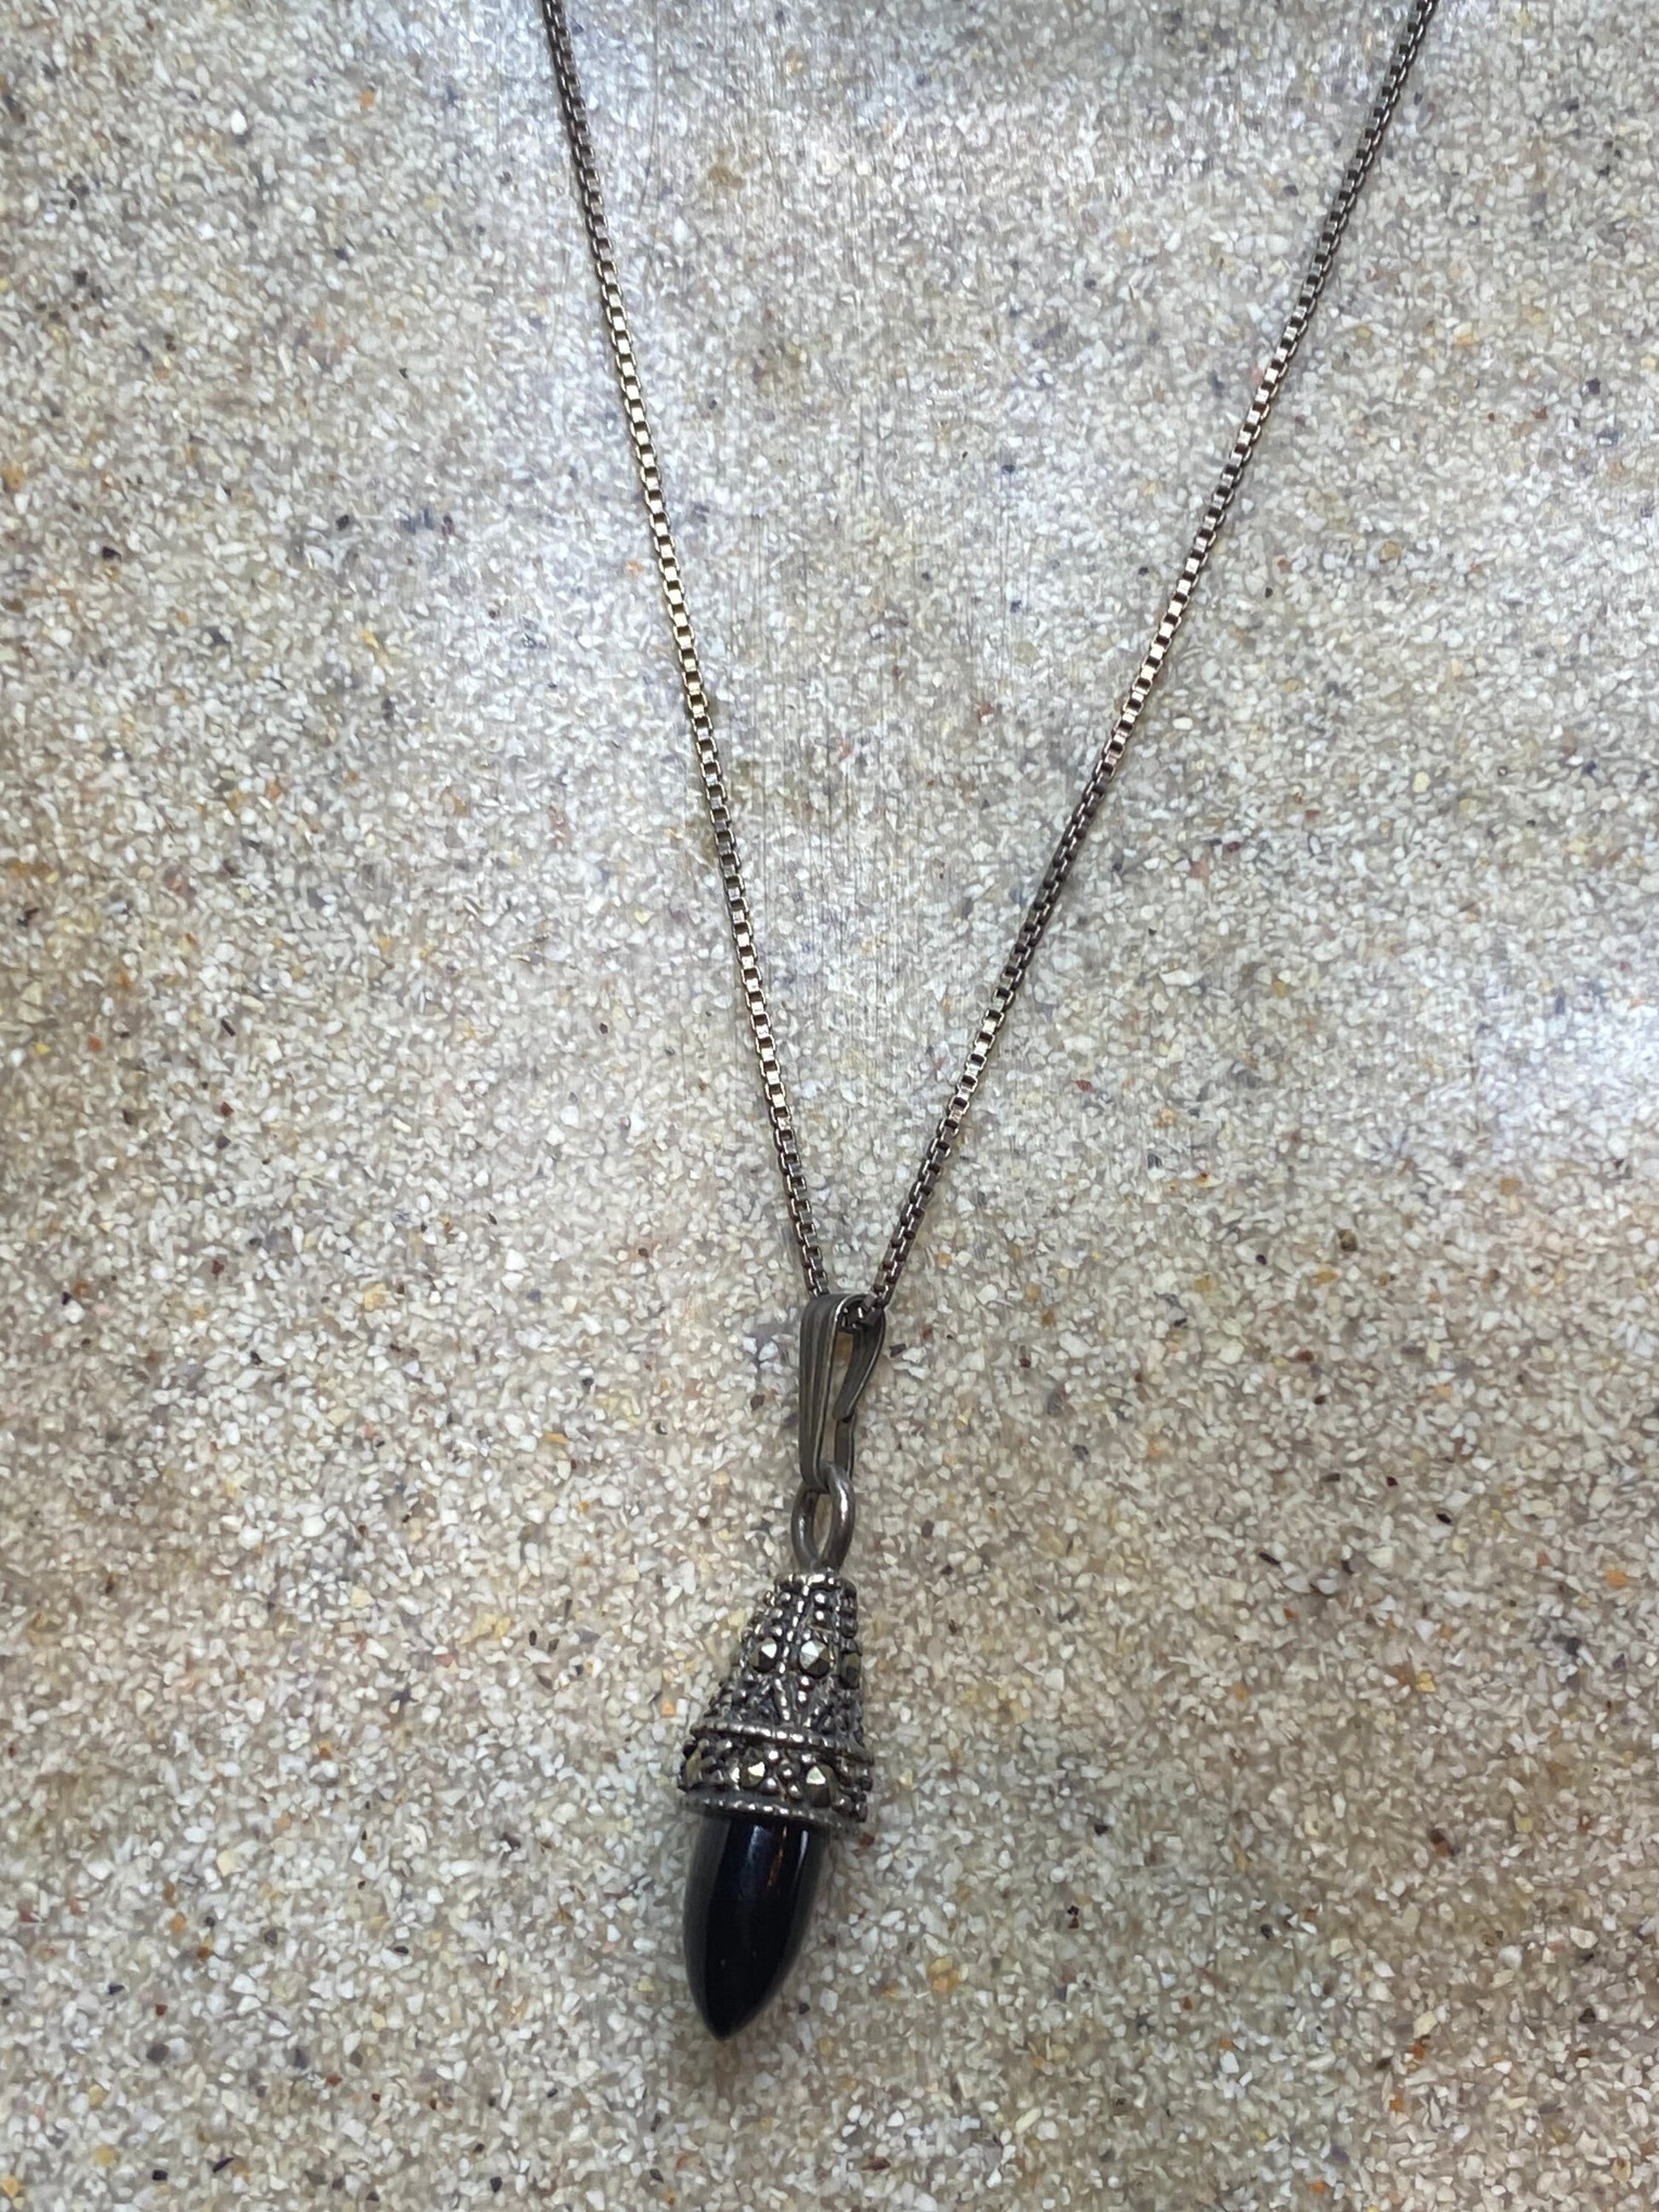 Vintage 925 Sterling Silver Black Onyx Marcasite Pendant 18 inch necklace